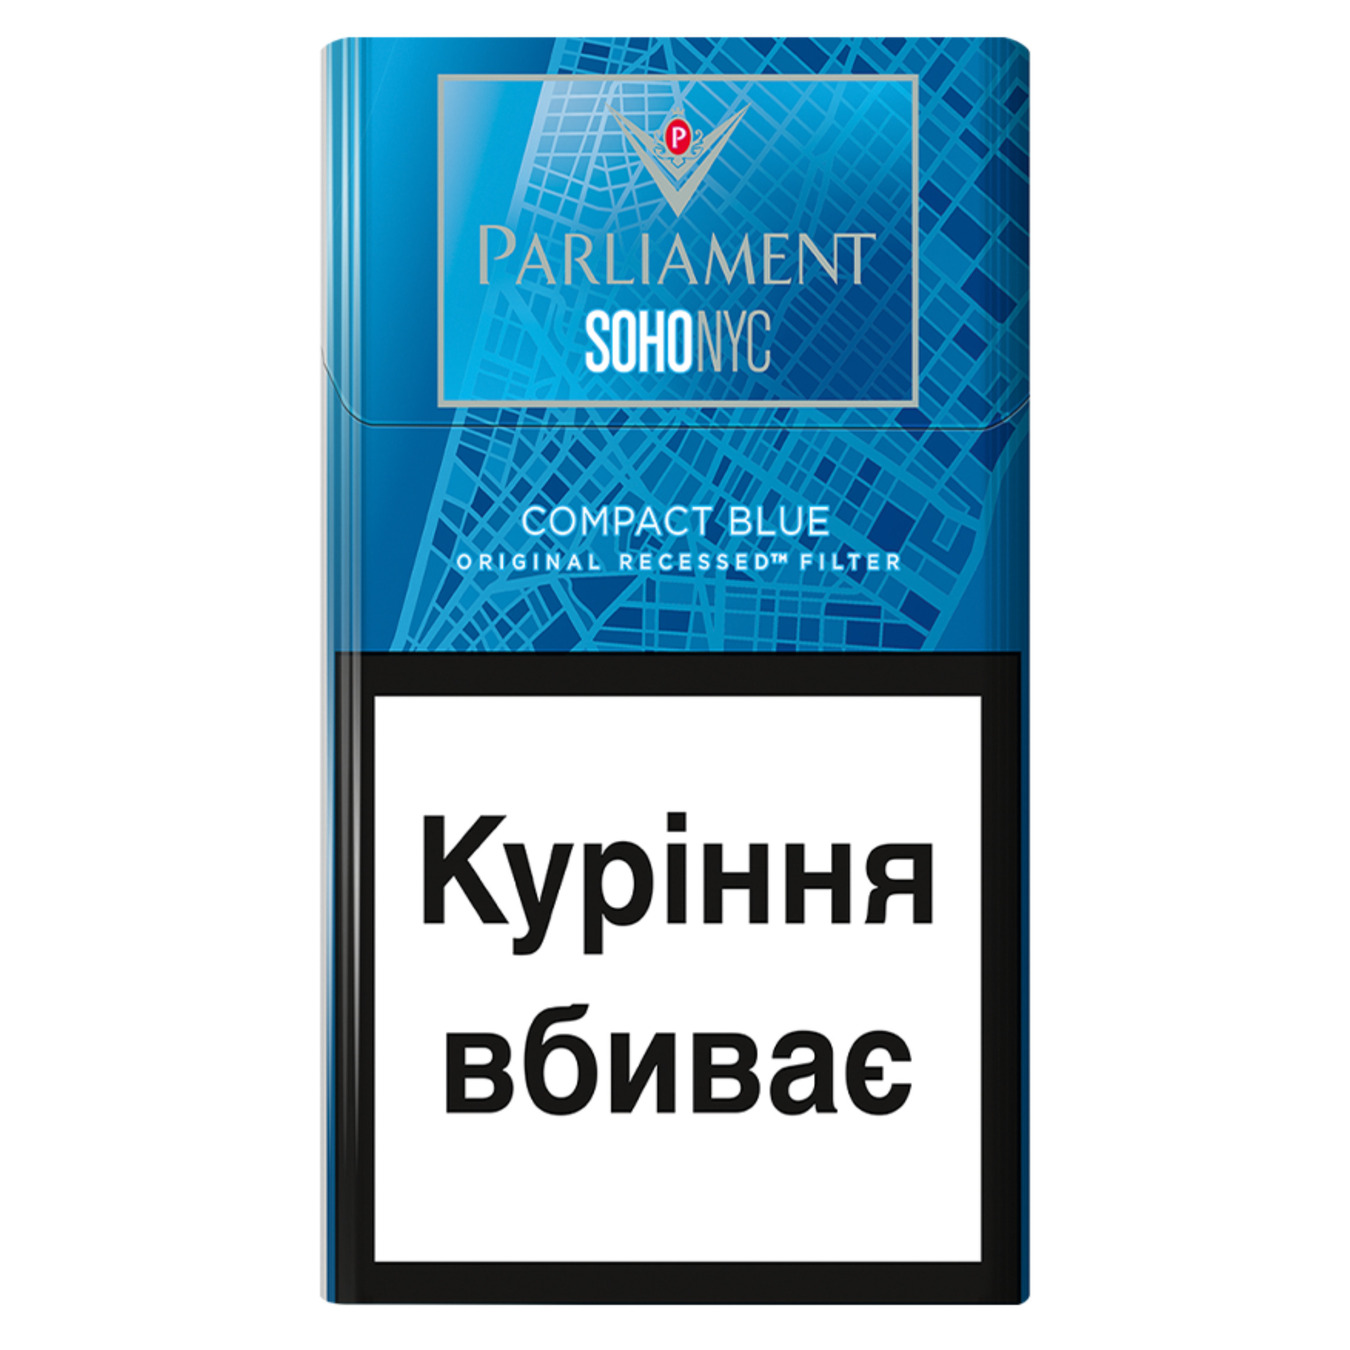 Сигареты Parliament Soho NYC Compact Blue 20шт (цена указана без акциза)